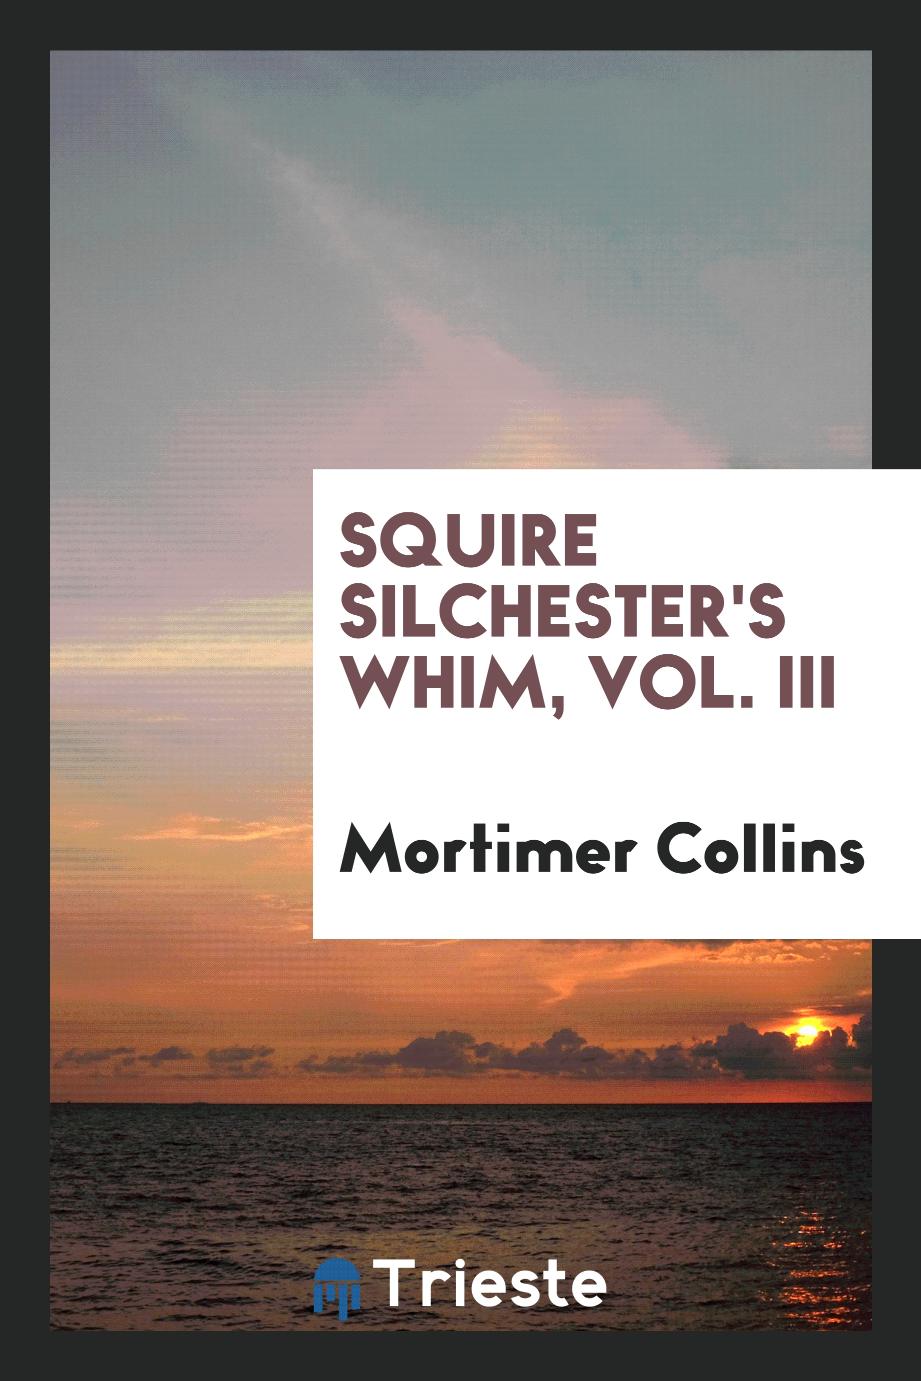 Squire Silchester's whim, Vol. III